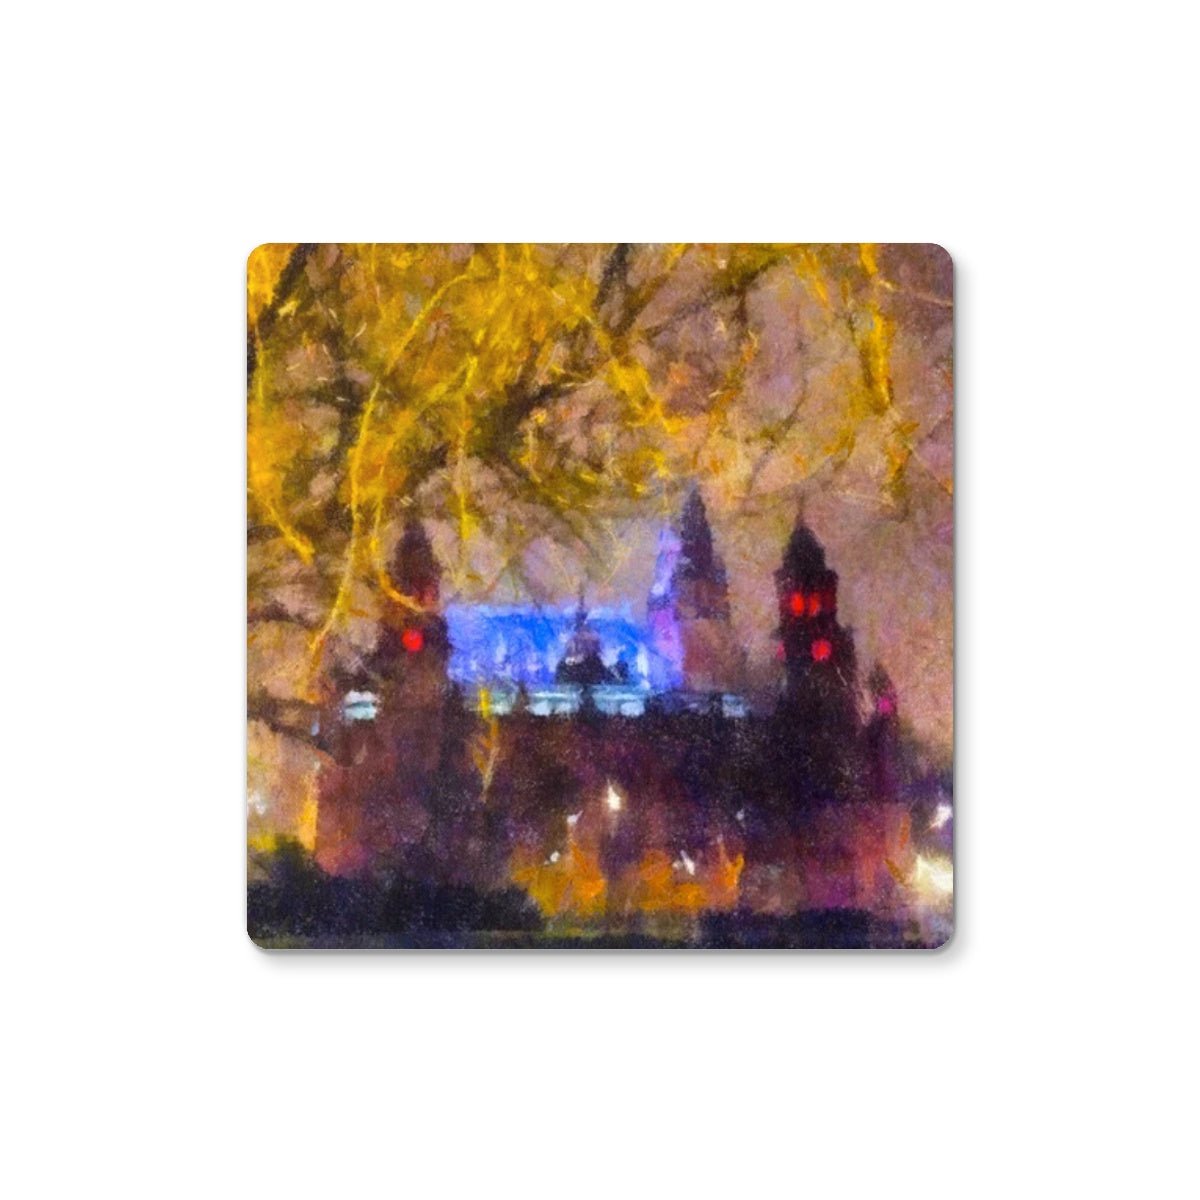 Kelvingrove Nights Glasgow Art Gifts Coaster-Coasters-Edinburgh & Glasgow Art Gallery-Single Coaster-Paintings, Prints, Homeware, Art Gifts From Scotland By Scottish Artist Kevin Hunter